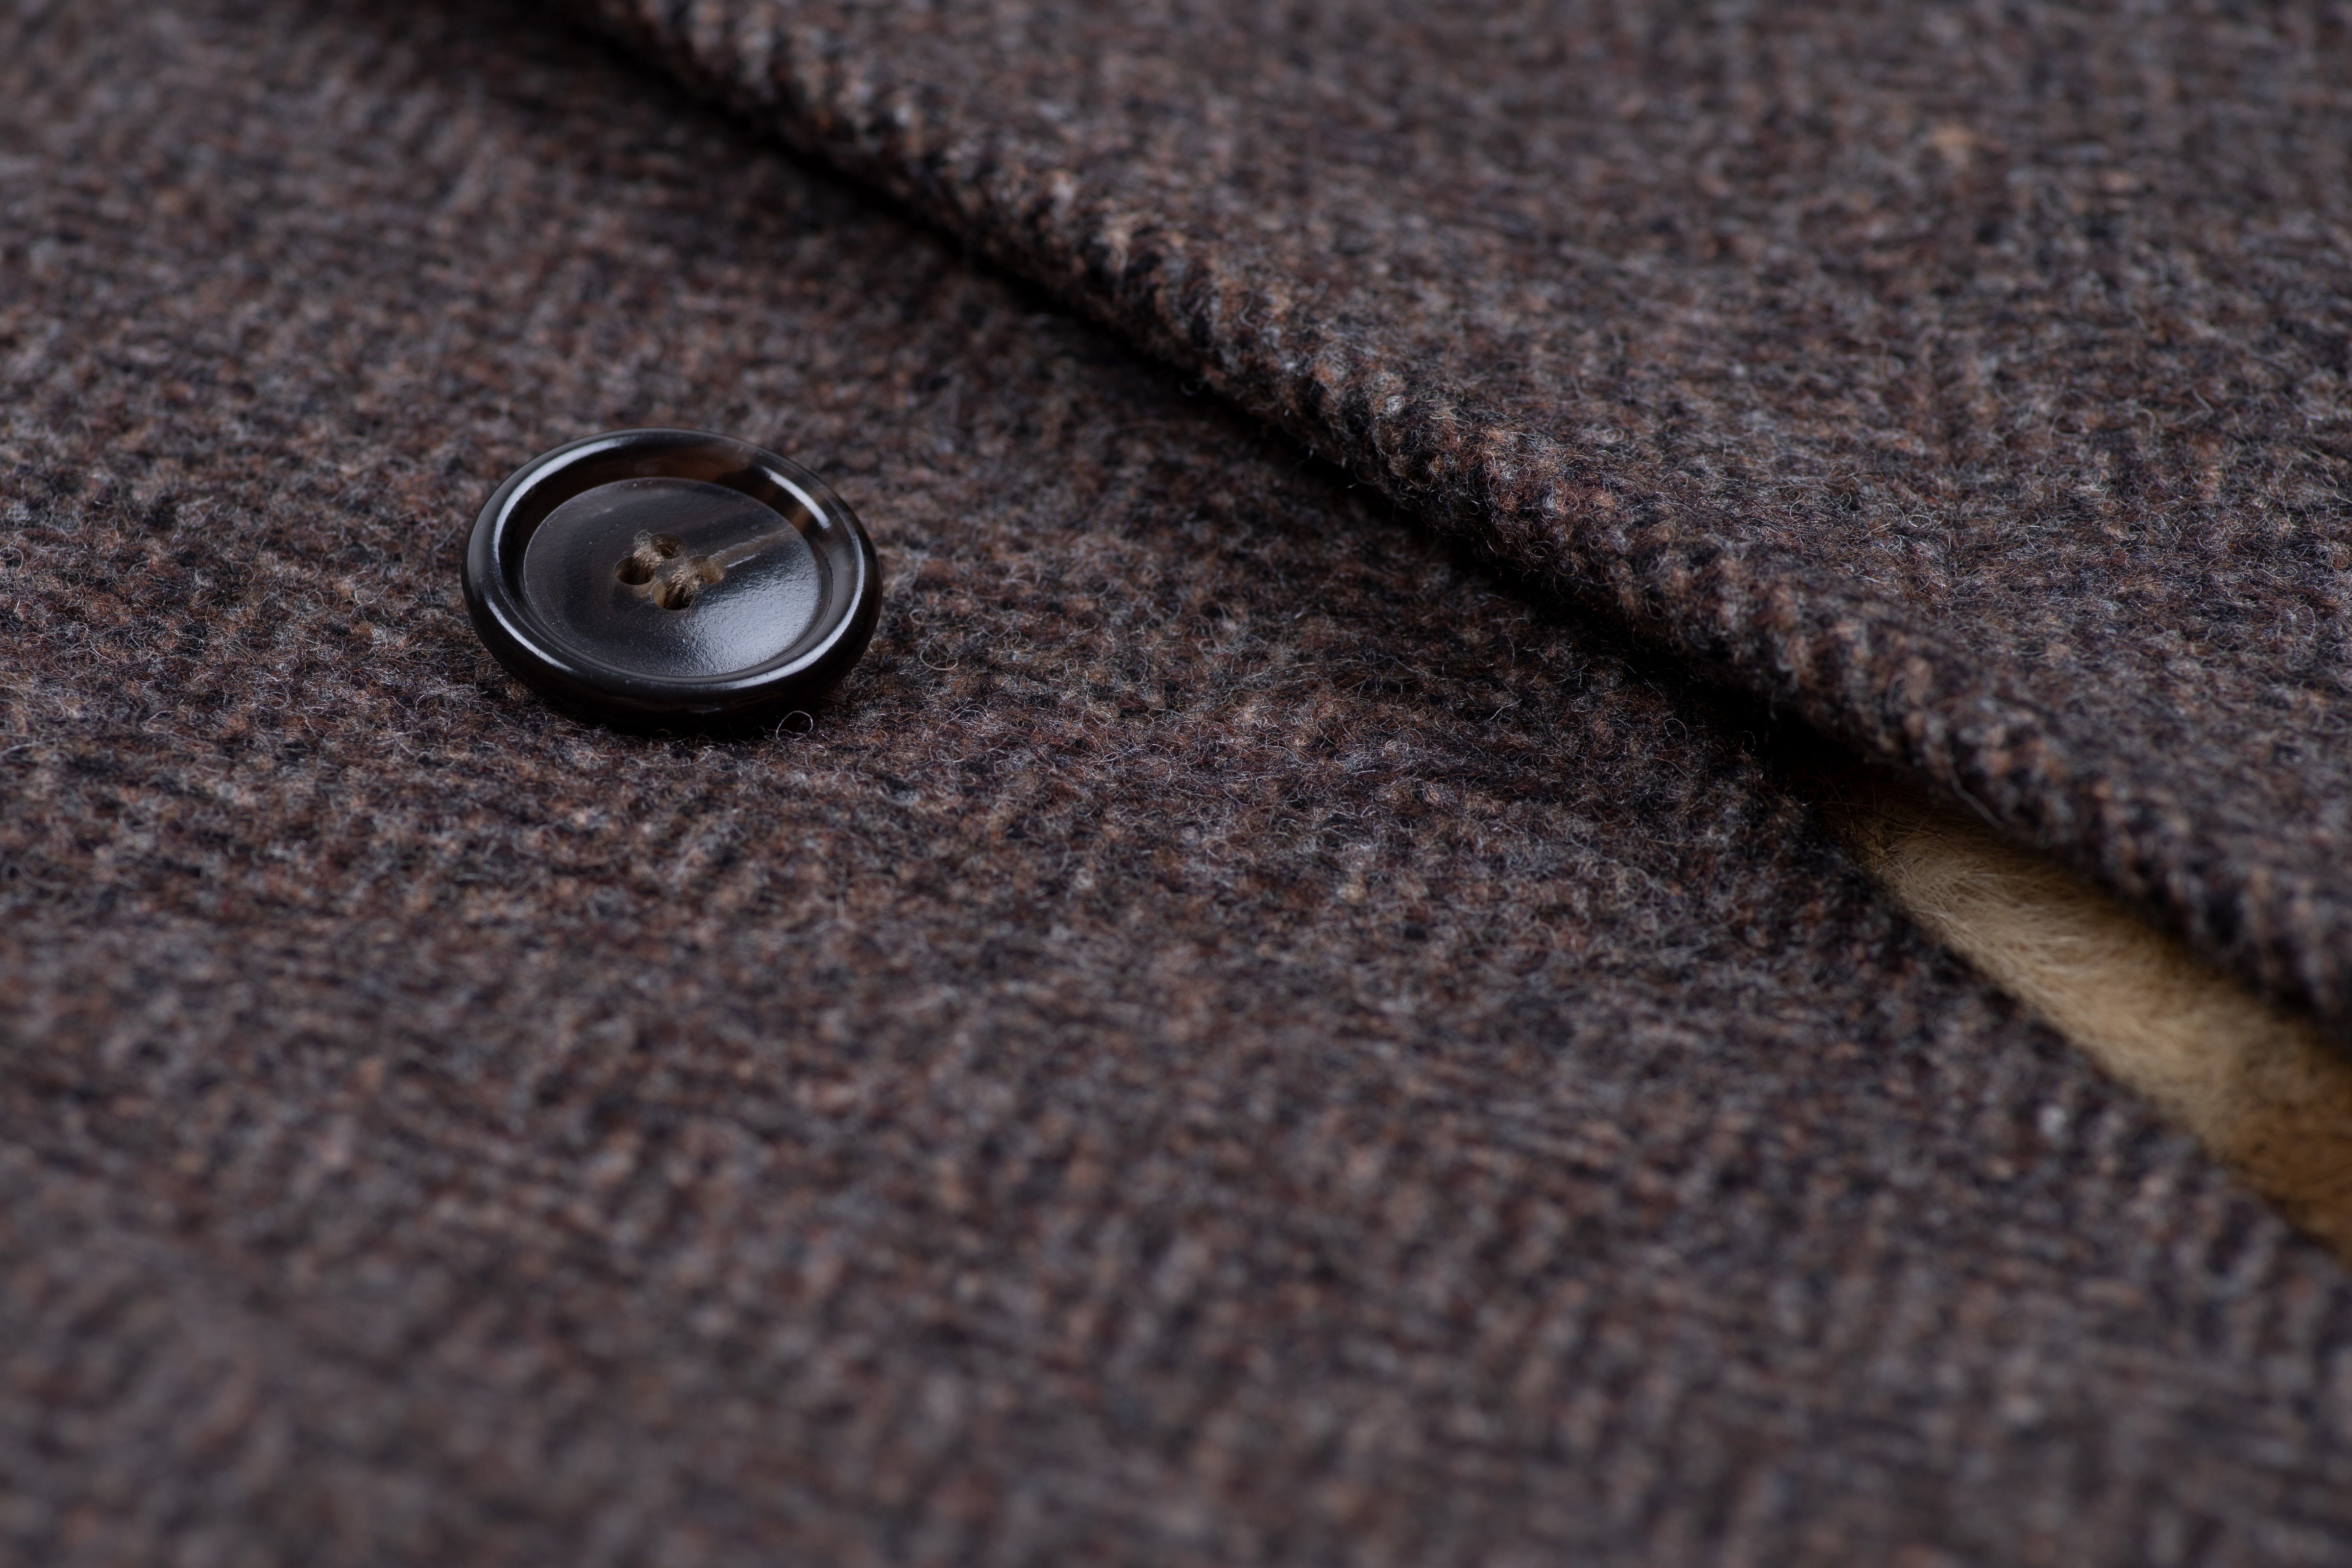 Crombie Cloth Herringbone Tweed Wool Coat With removable Fur Lining, USA 44S